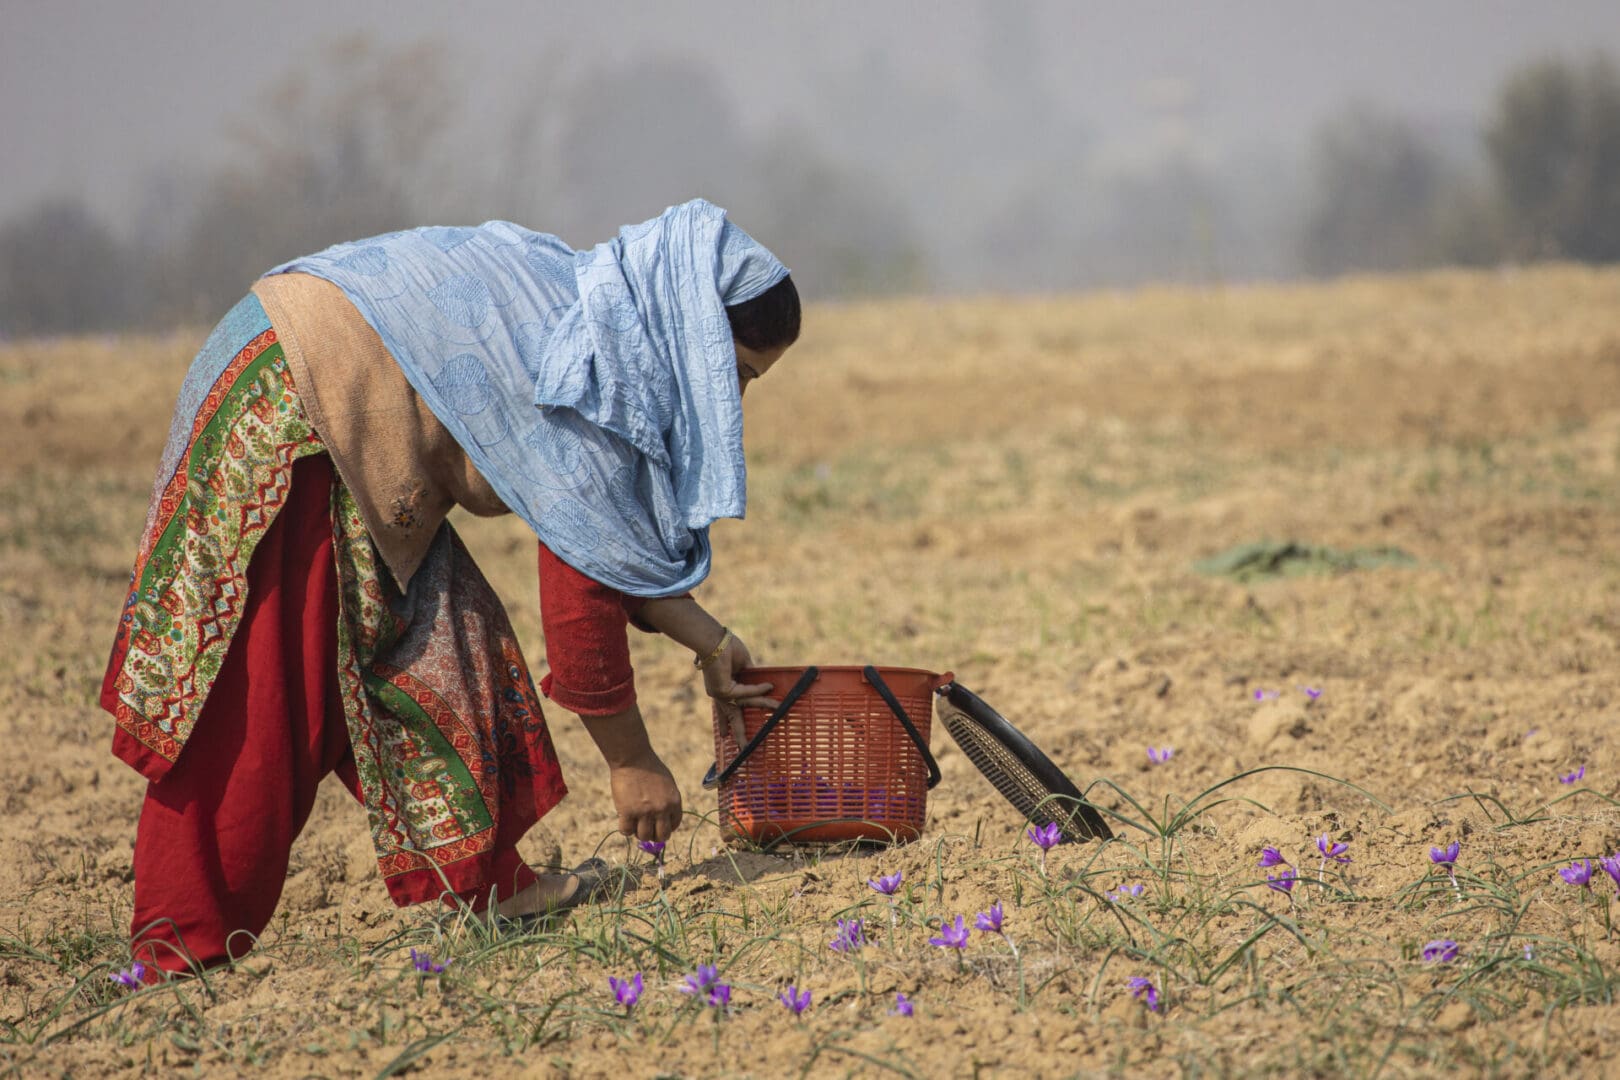 A woman picking saffron in a field.